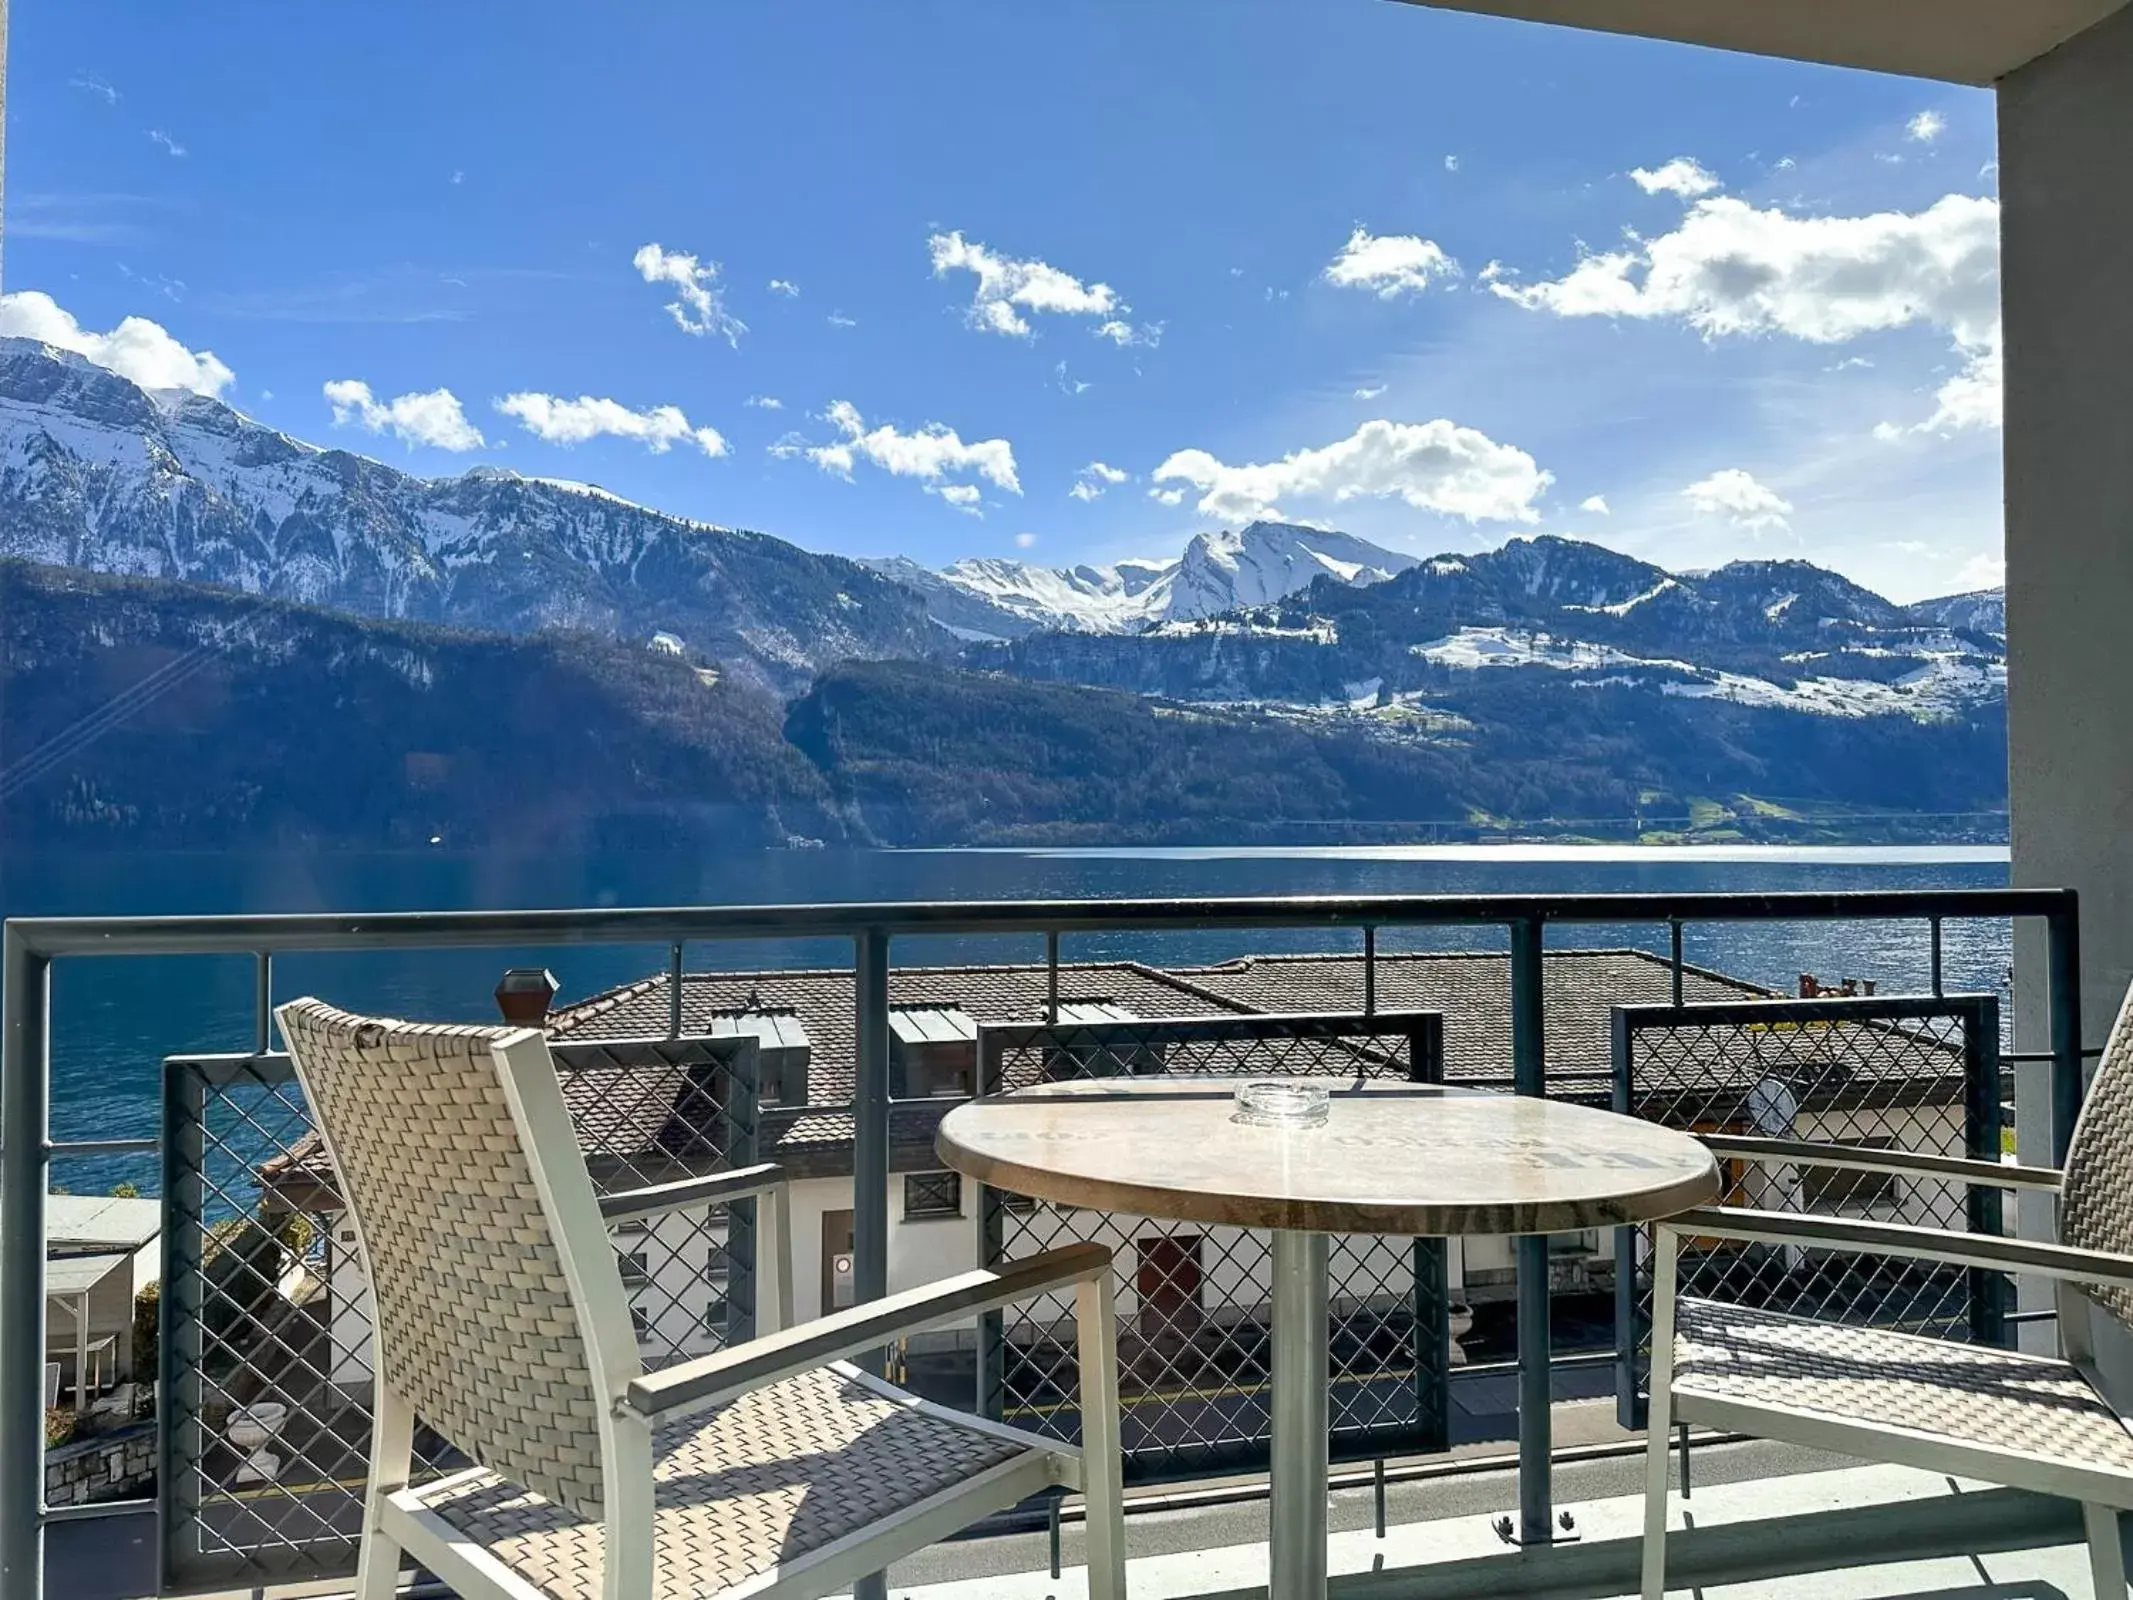 Lake view in Seehotel Riviera at Lake Lucerne